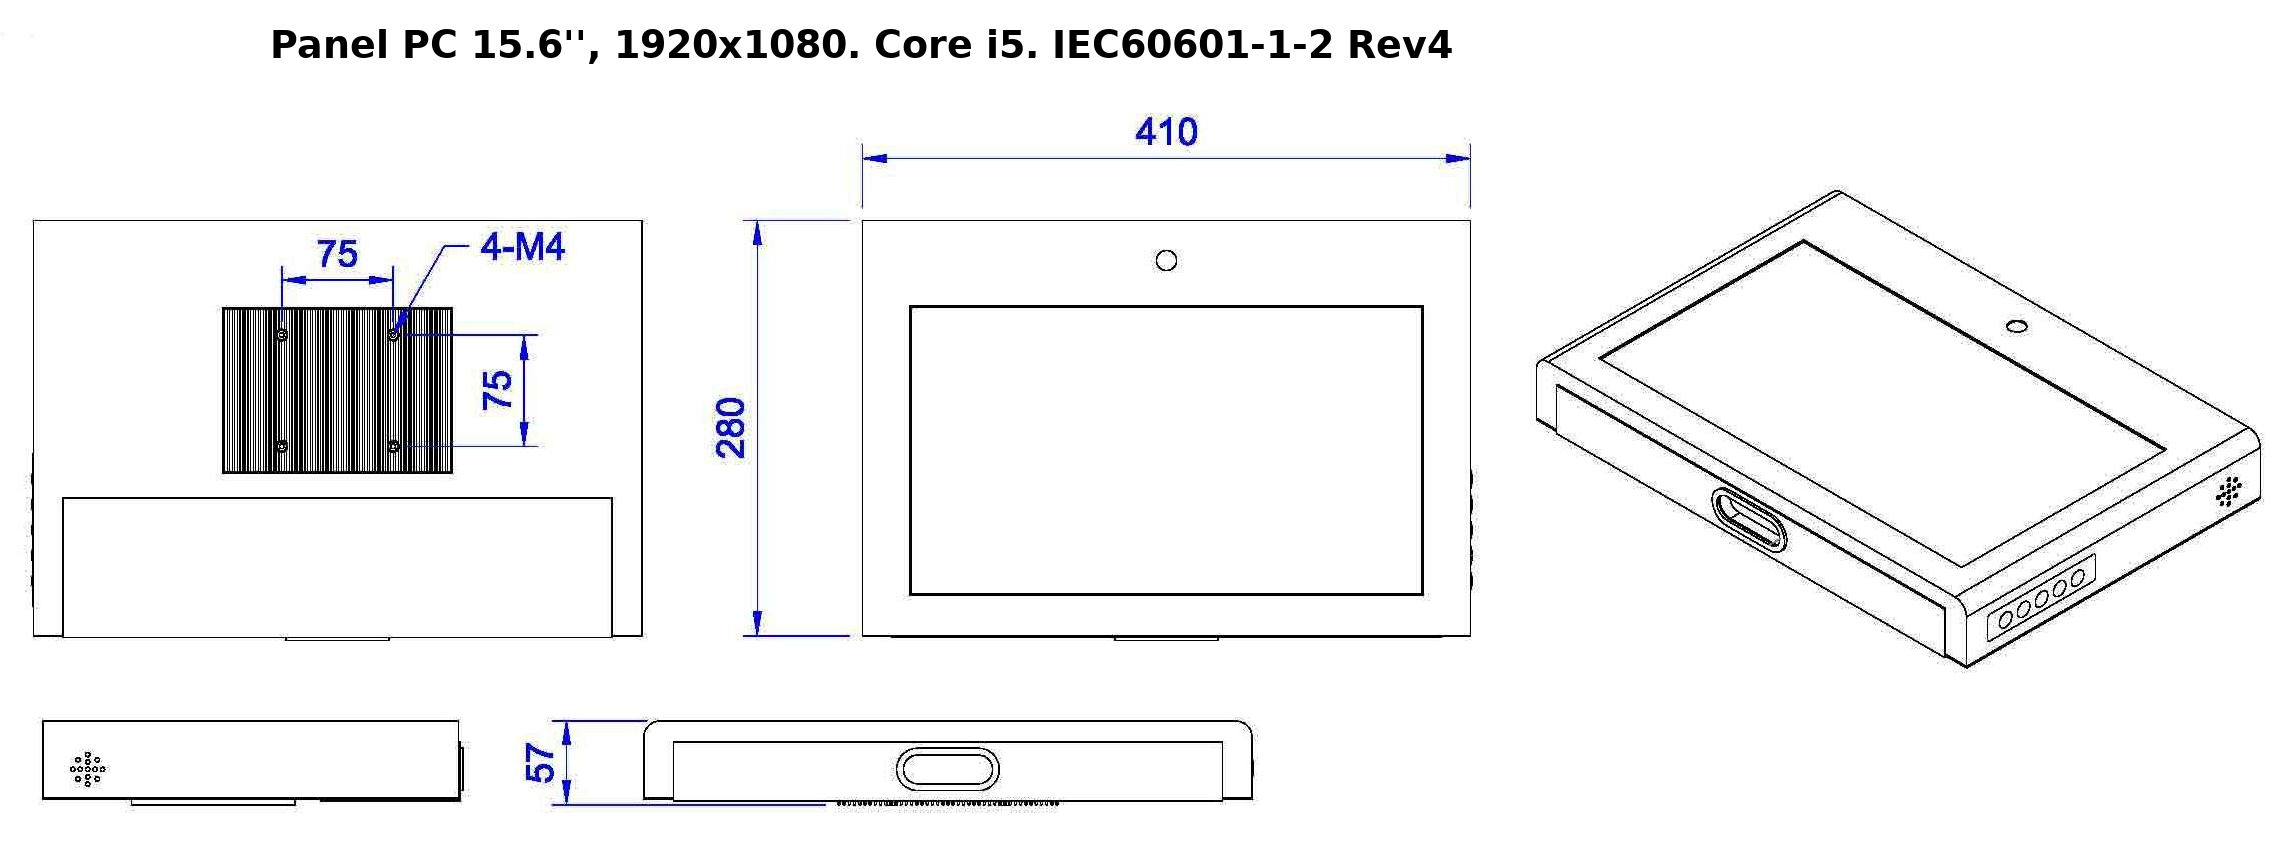 Panel PC IEC60601-1-2 Rev 4